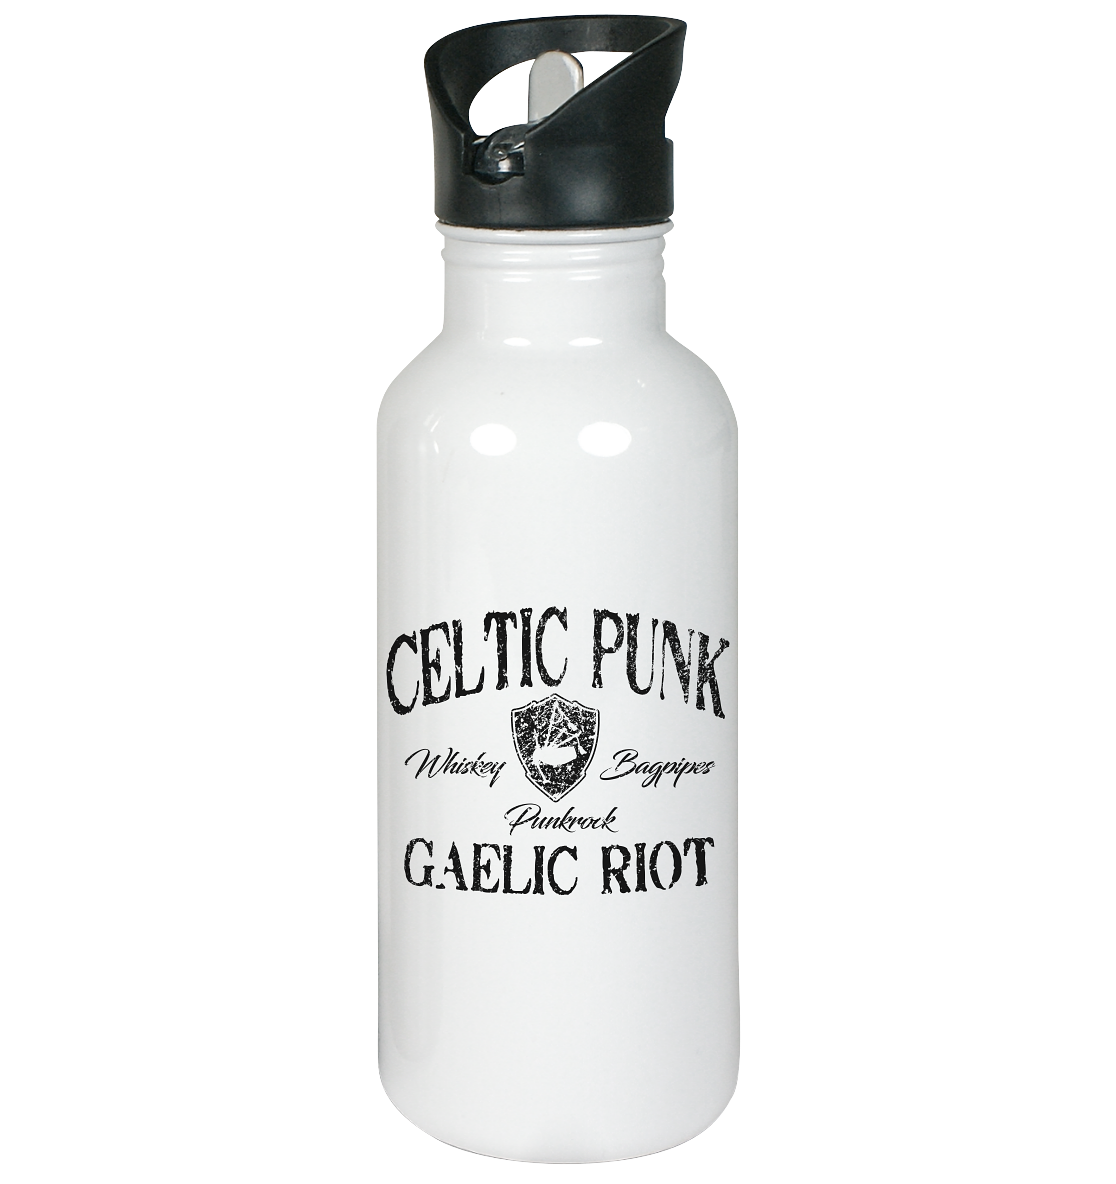 Celtic Punk "Gaelic Riot" - Edelstahl-Trinkflasche